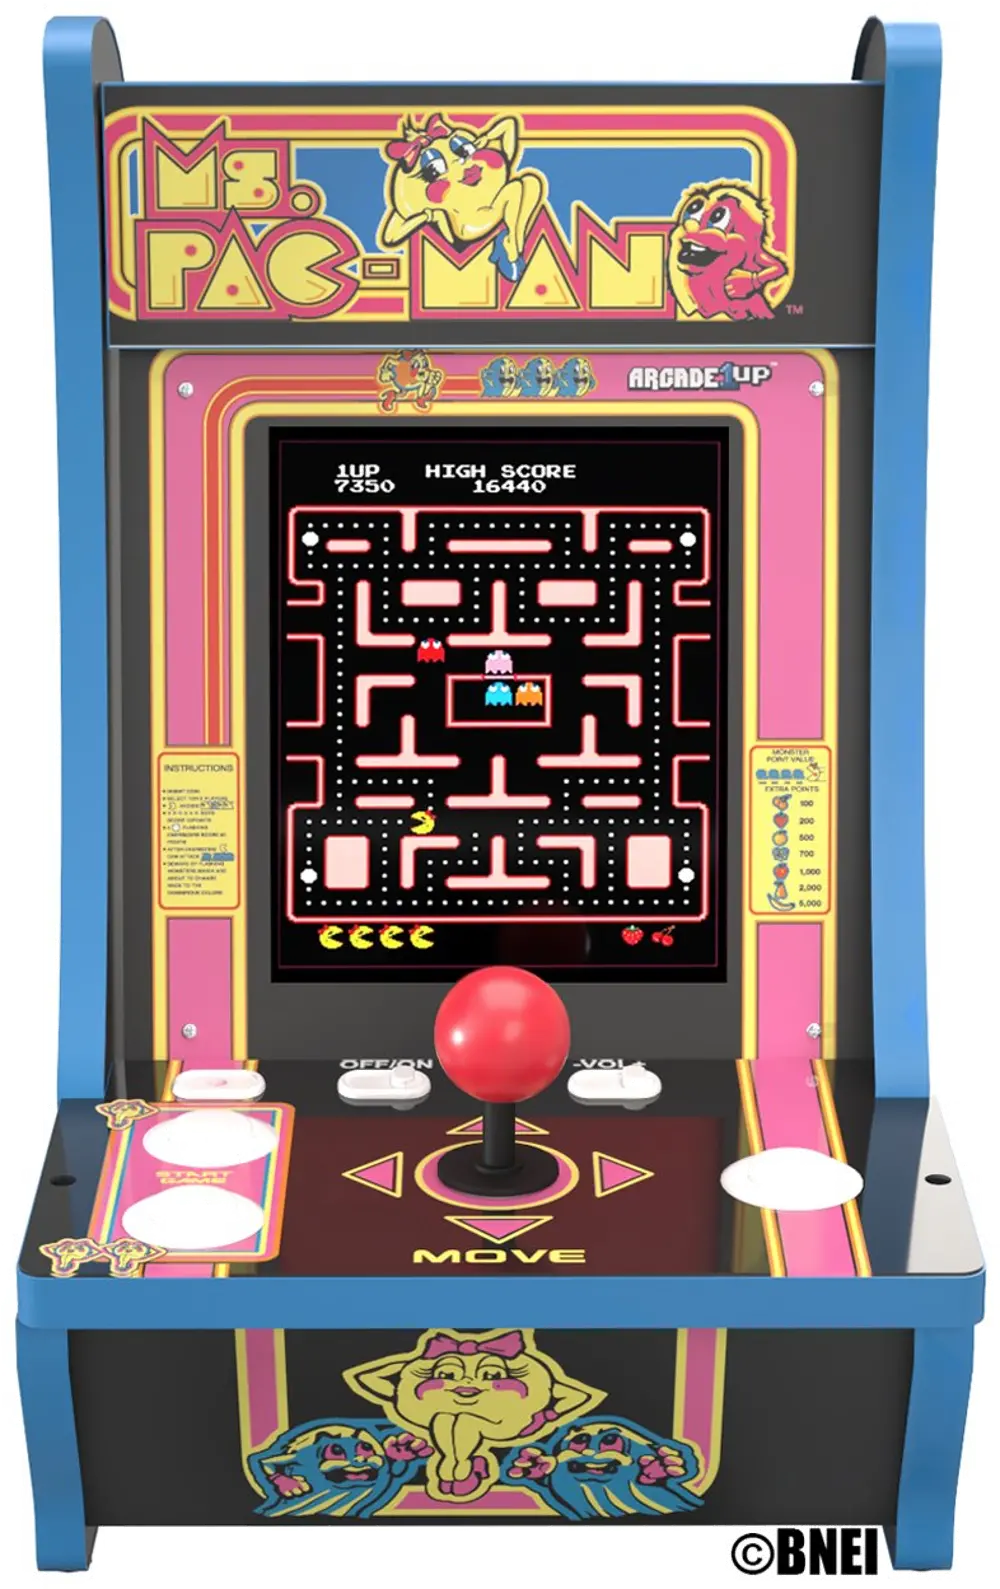 ARCADE1UP/MSPACMAN40 Arcade 1Up Ms PAC-MAN 40th Anniversary Counter-Cade-1